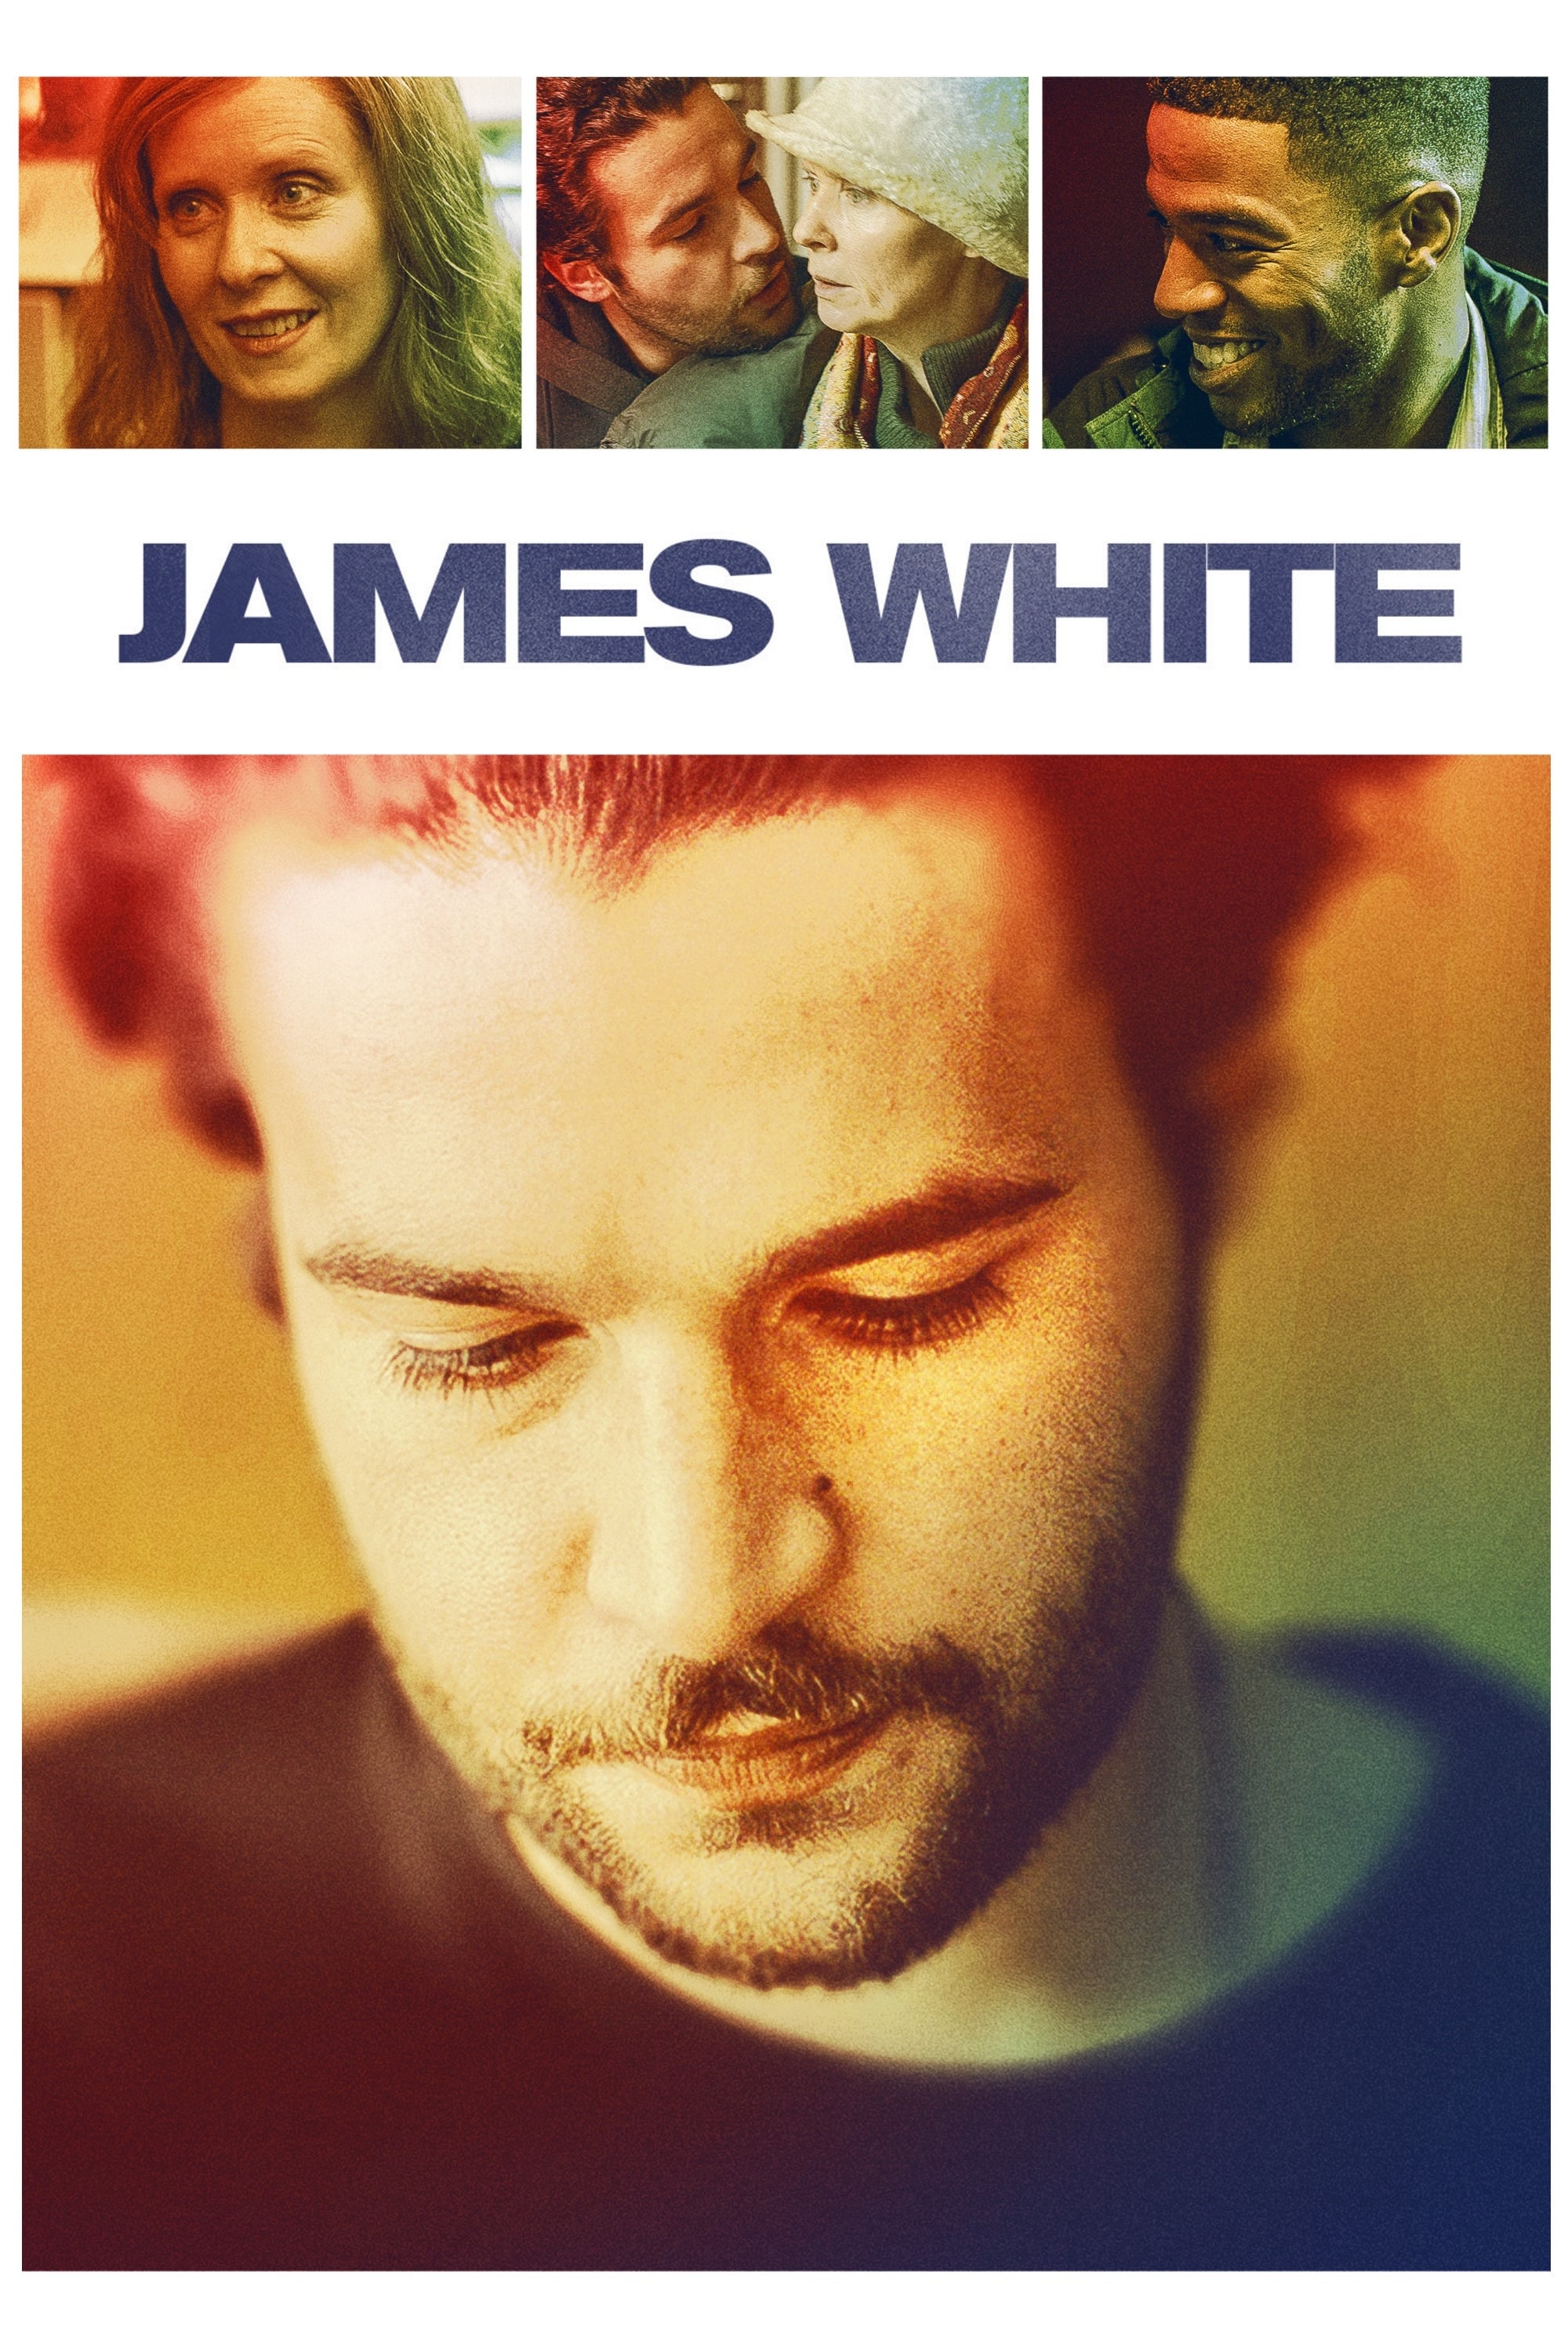 james white movie review